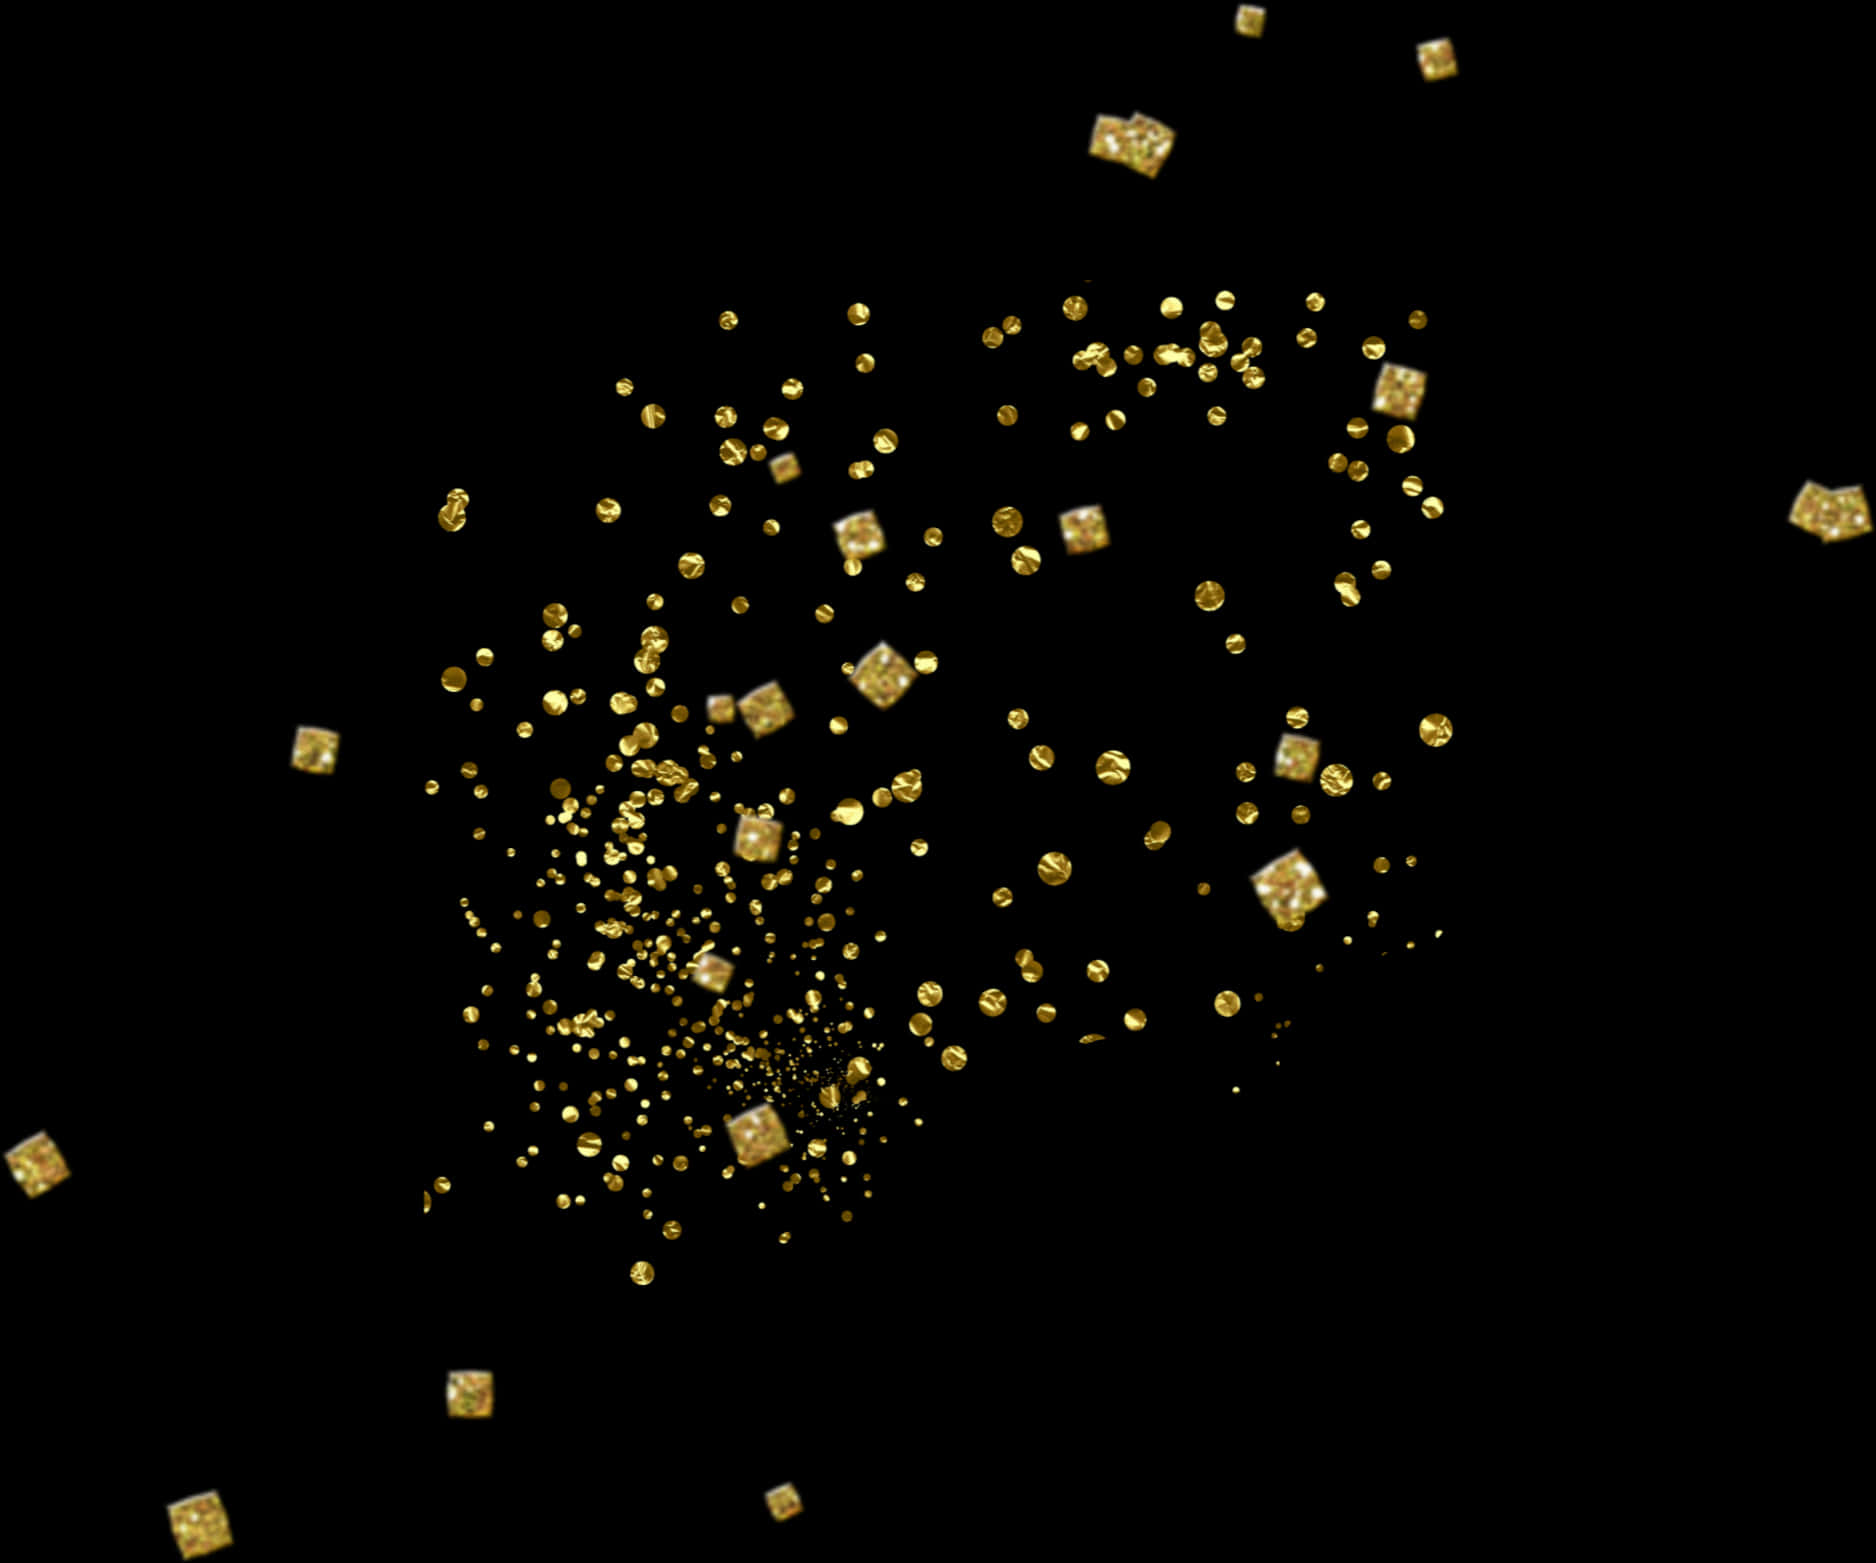 Gold Glittery Confetti On A Black Background